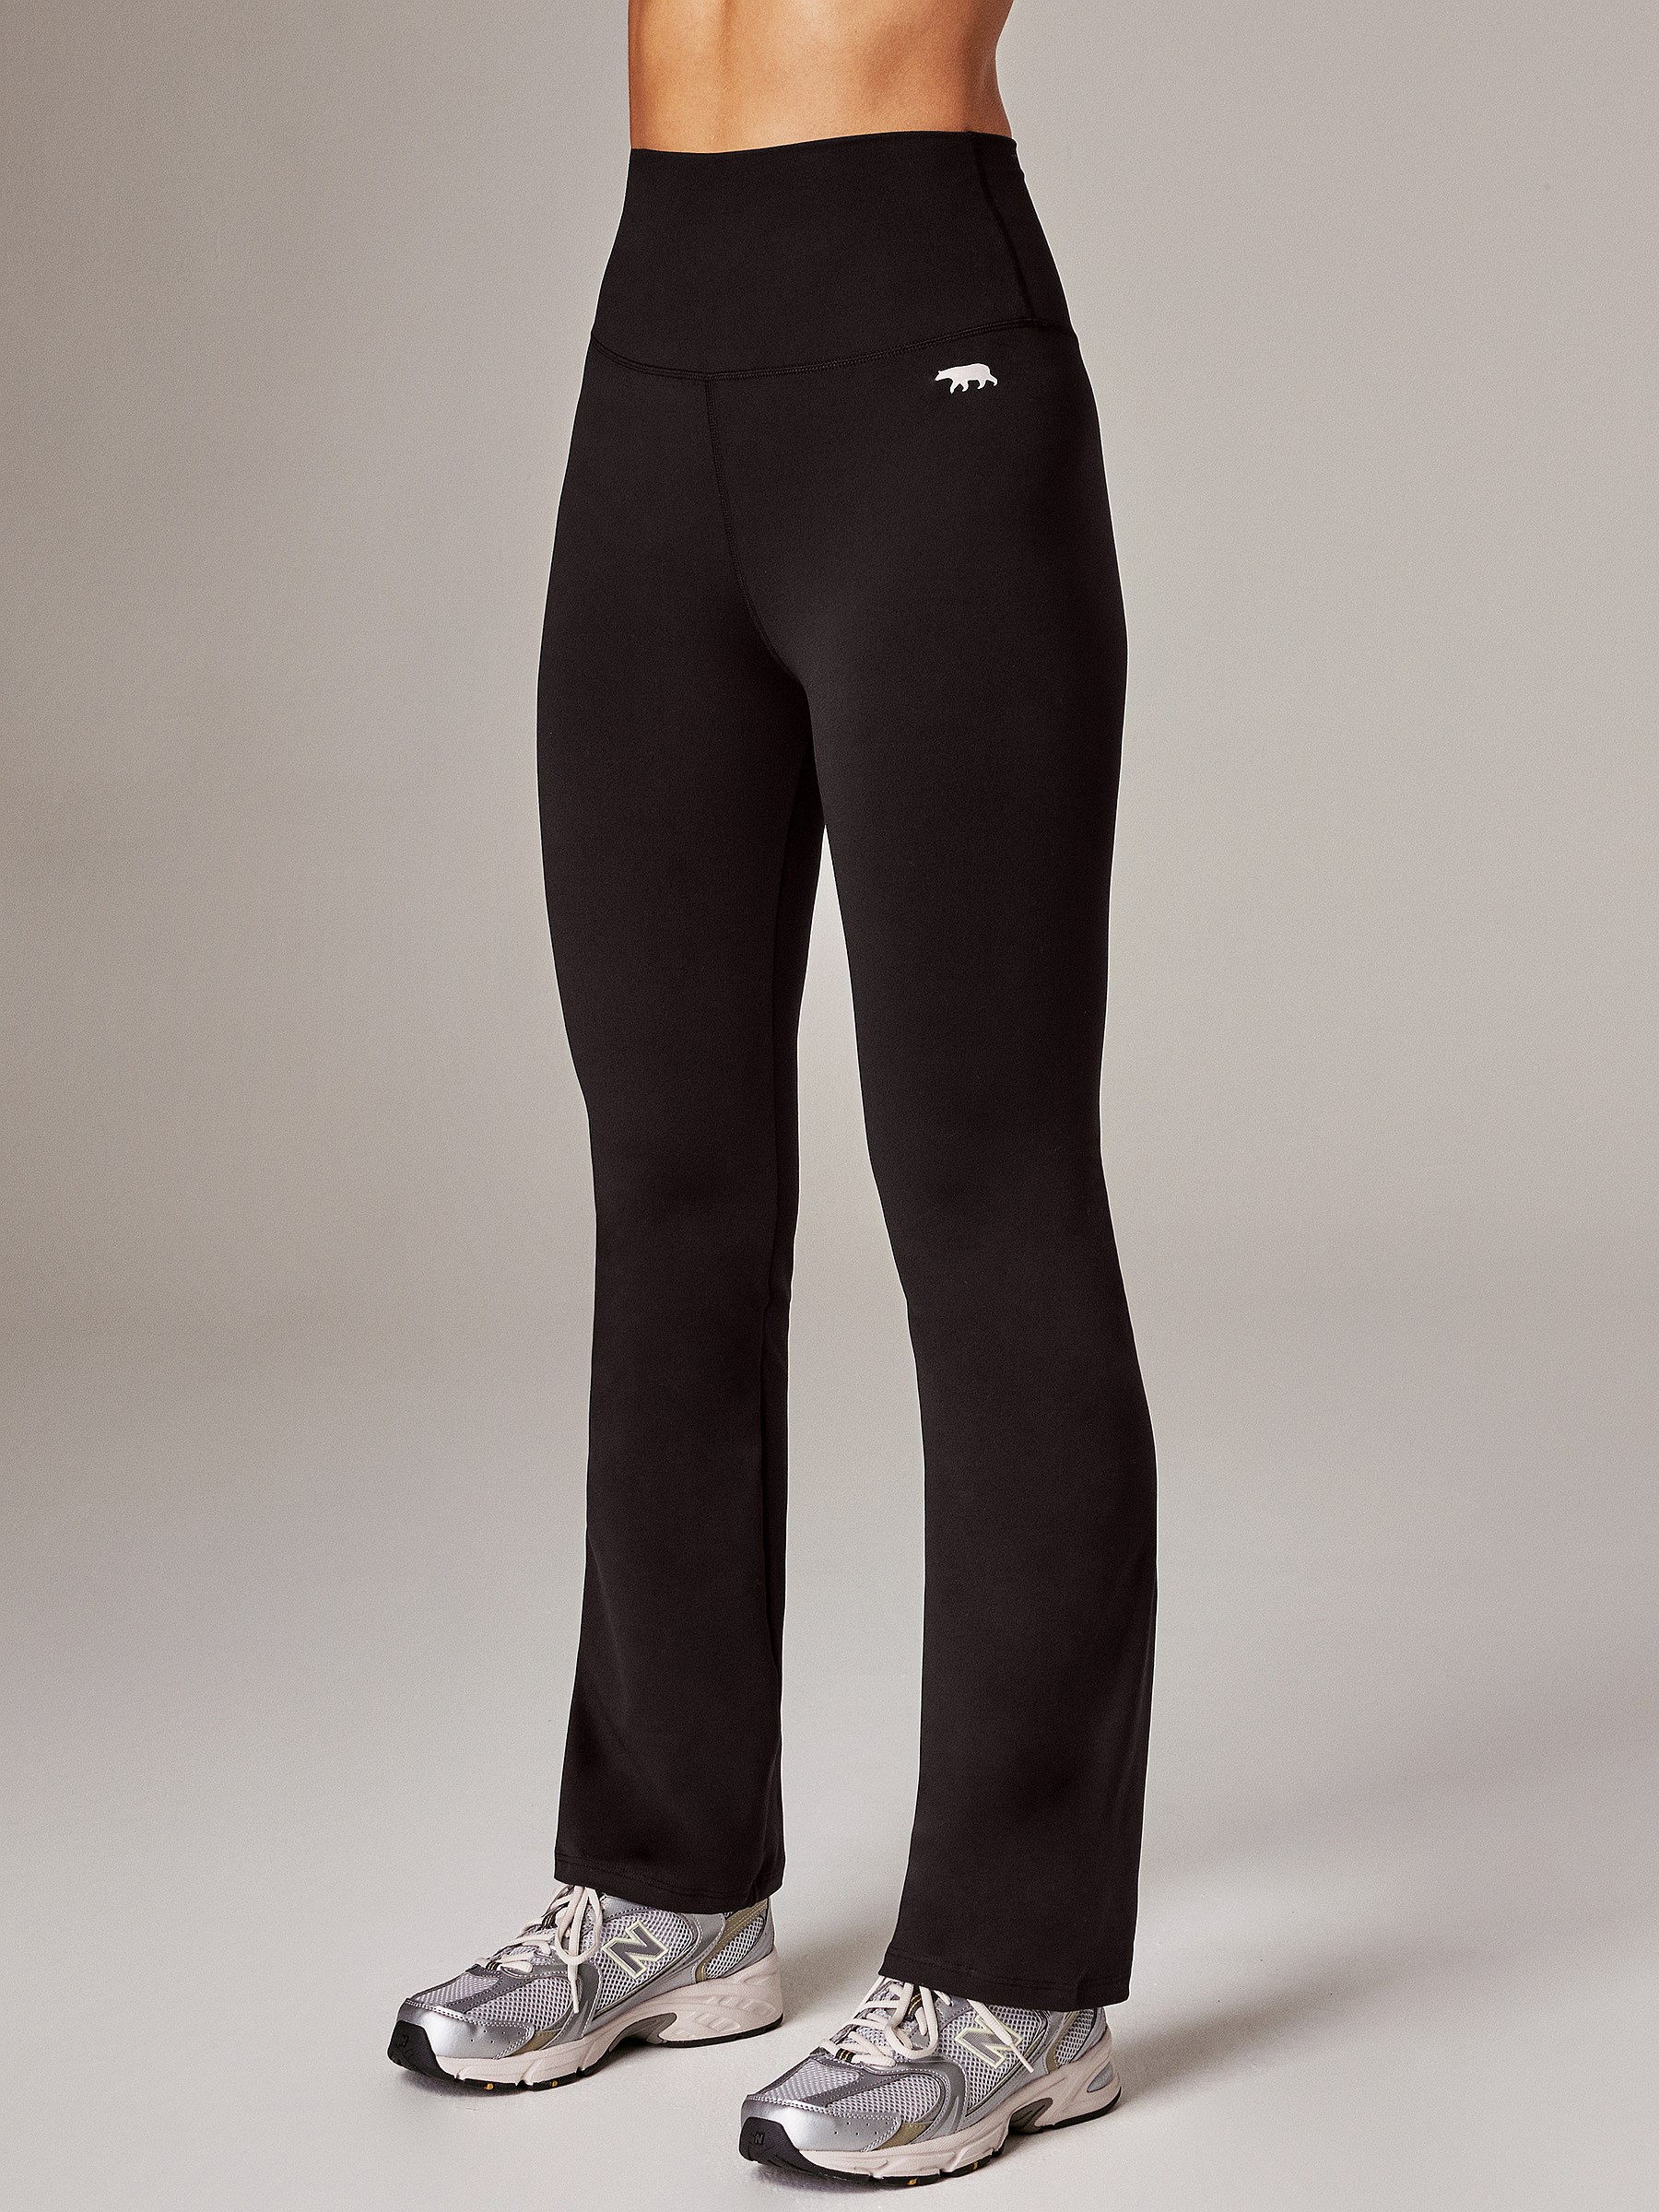 Running Bare Peach Me Yoga Pants- Black. Women's Yoga Clothing